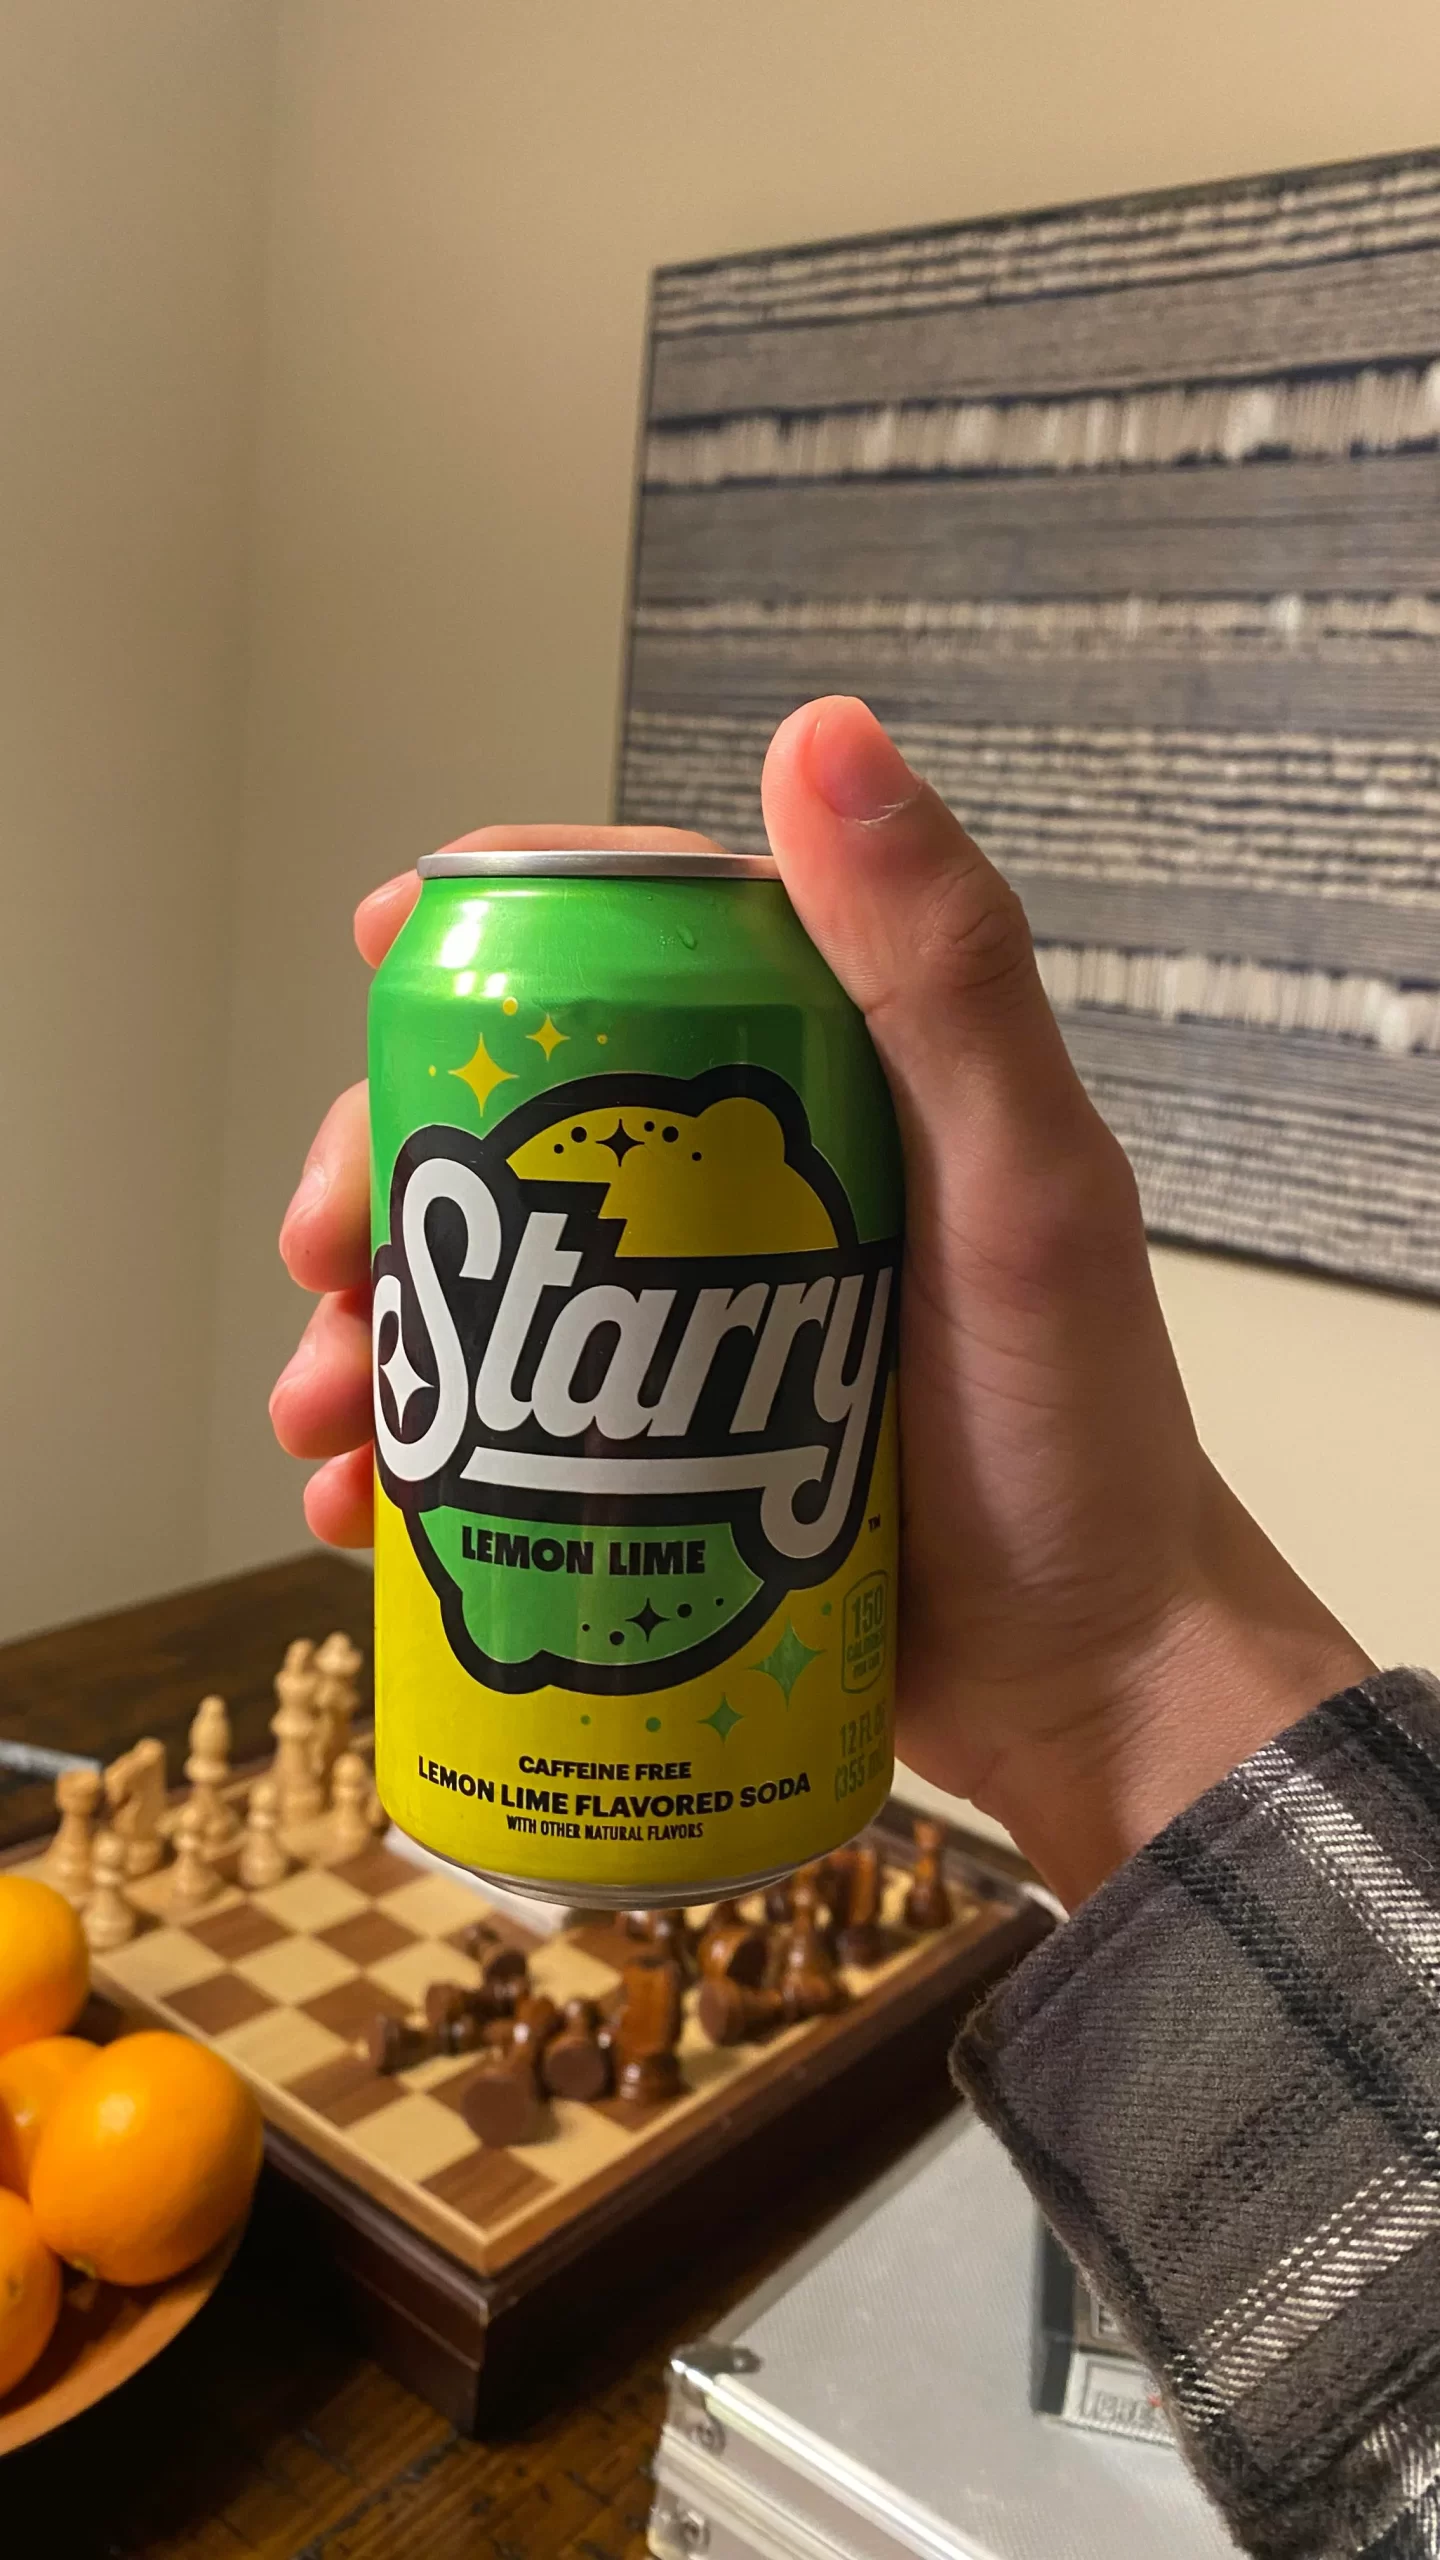 An Honest Review of Starry, PepsiCo's New Lemon-Lime Soda